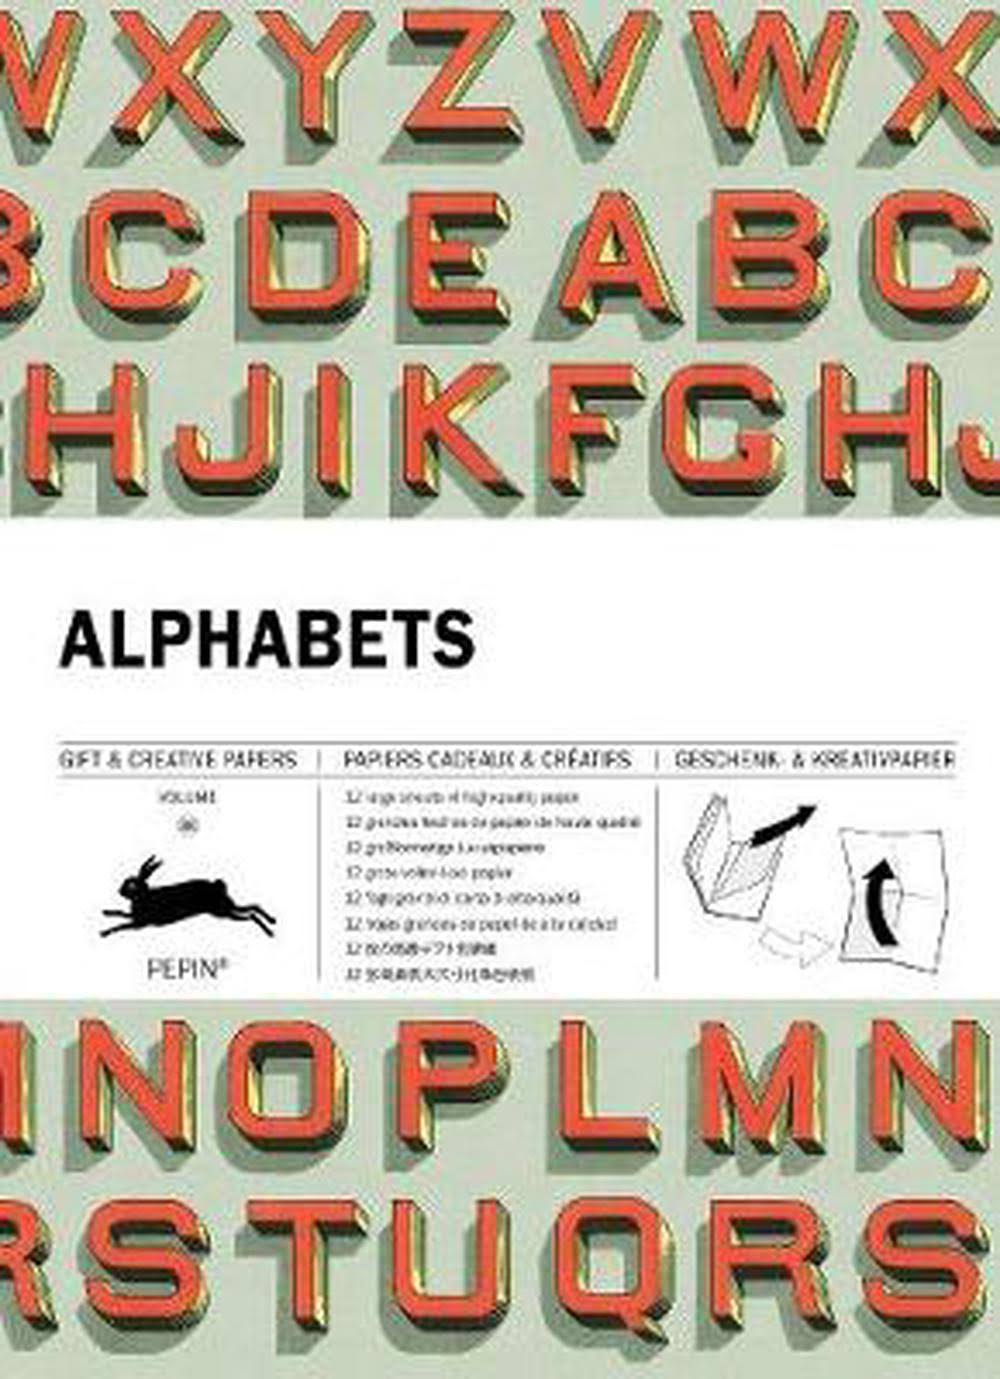 Alphabets by Pepin Van Roojen